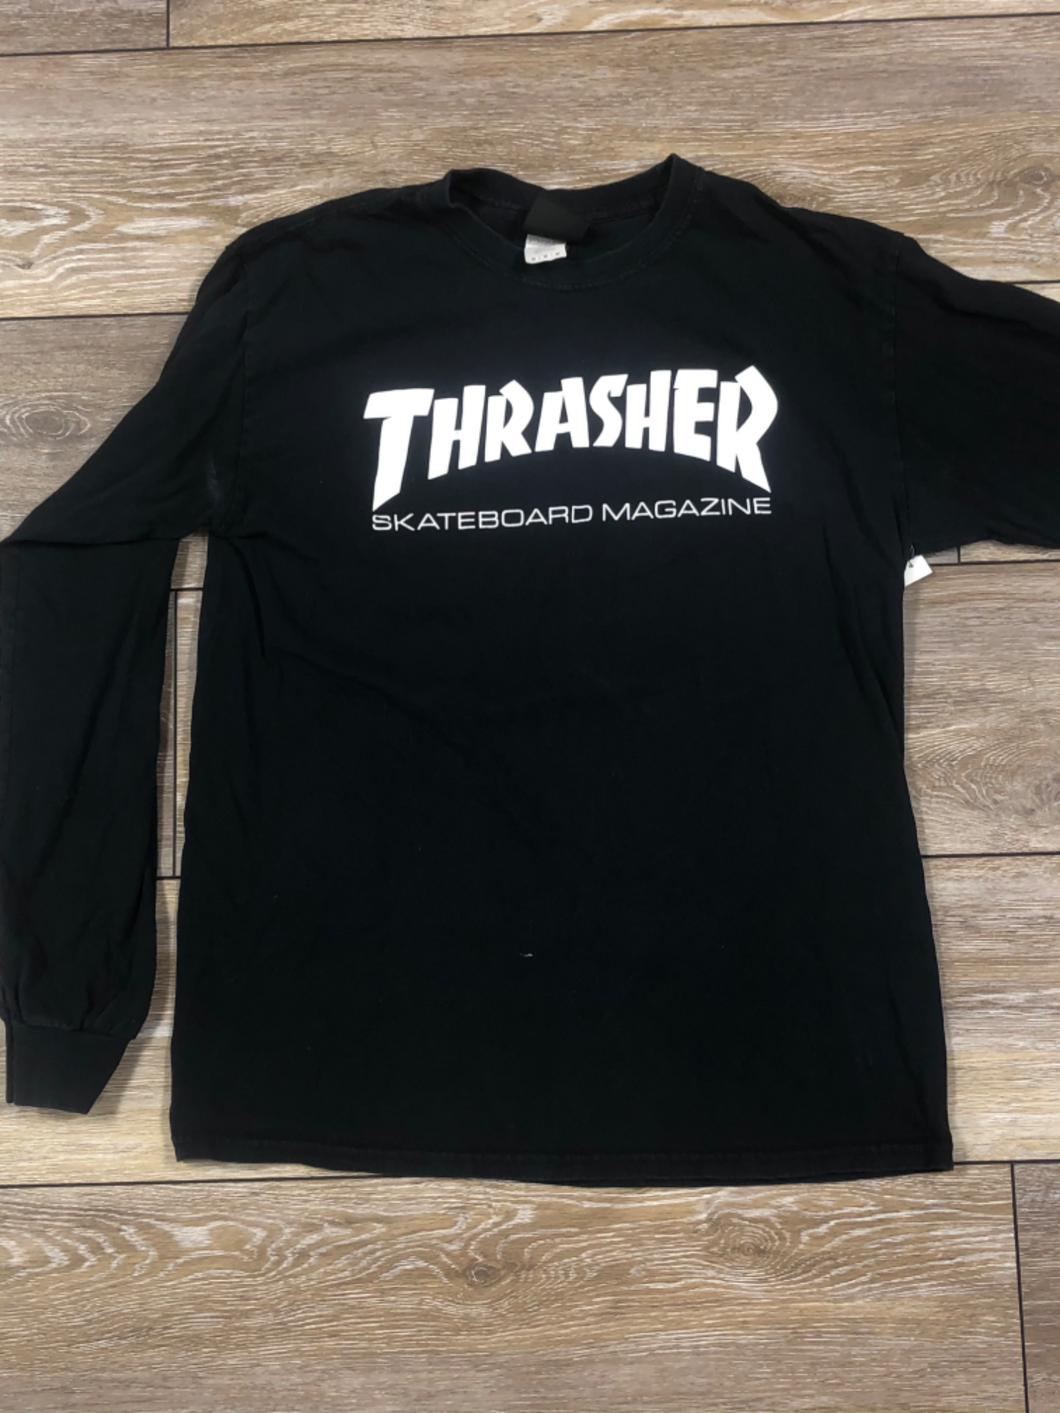 Thrasher Long Sleeve T-shirt Size Medium